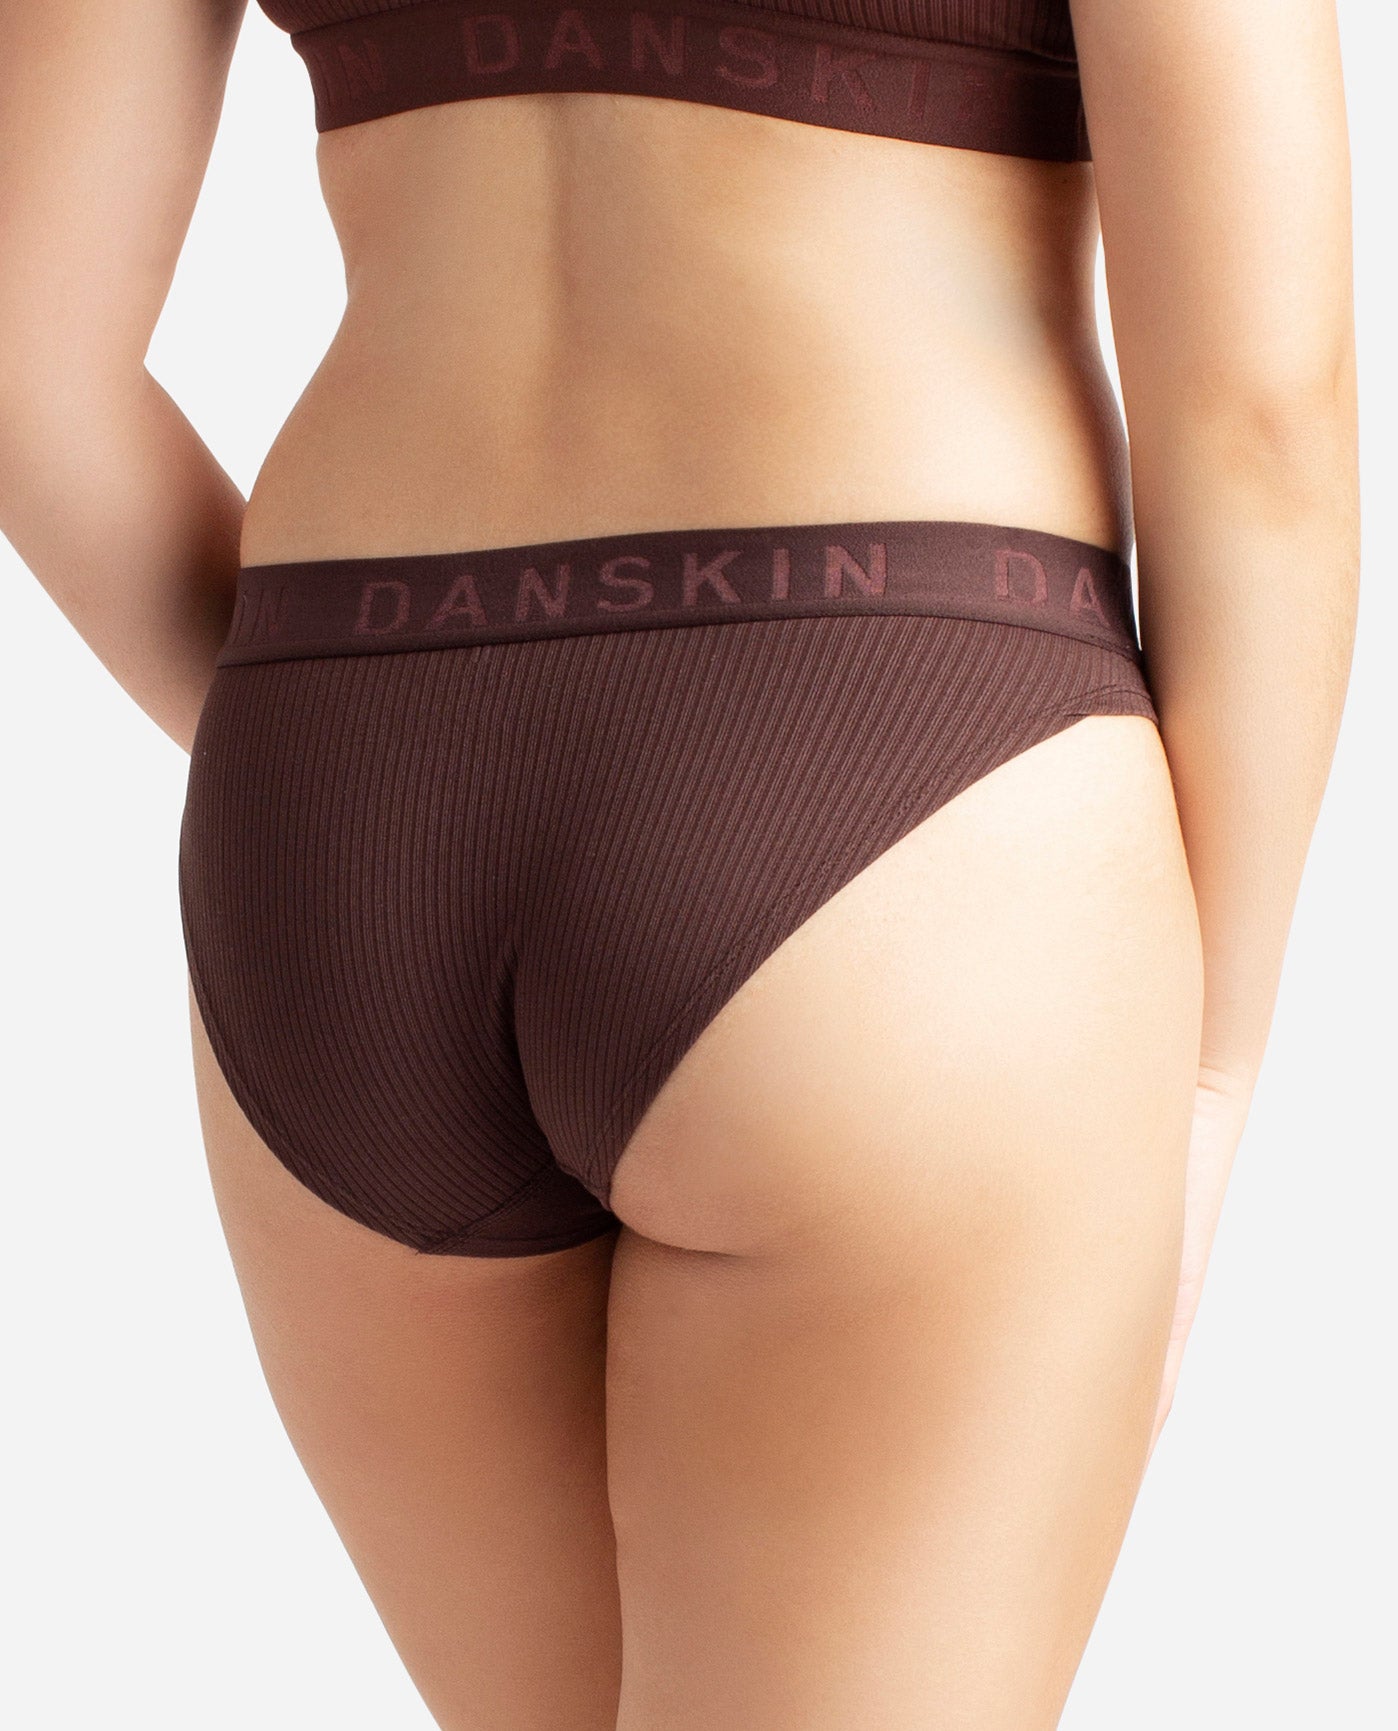 Panty's - Collants: Danskin panty's - Girls